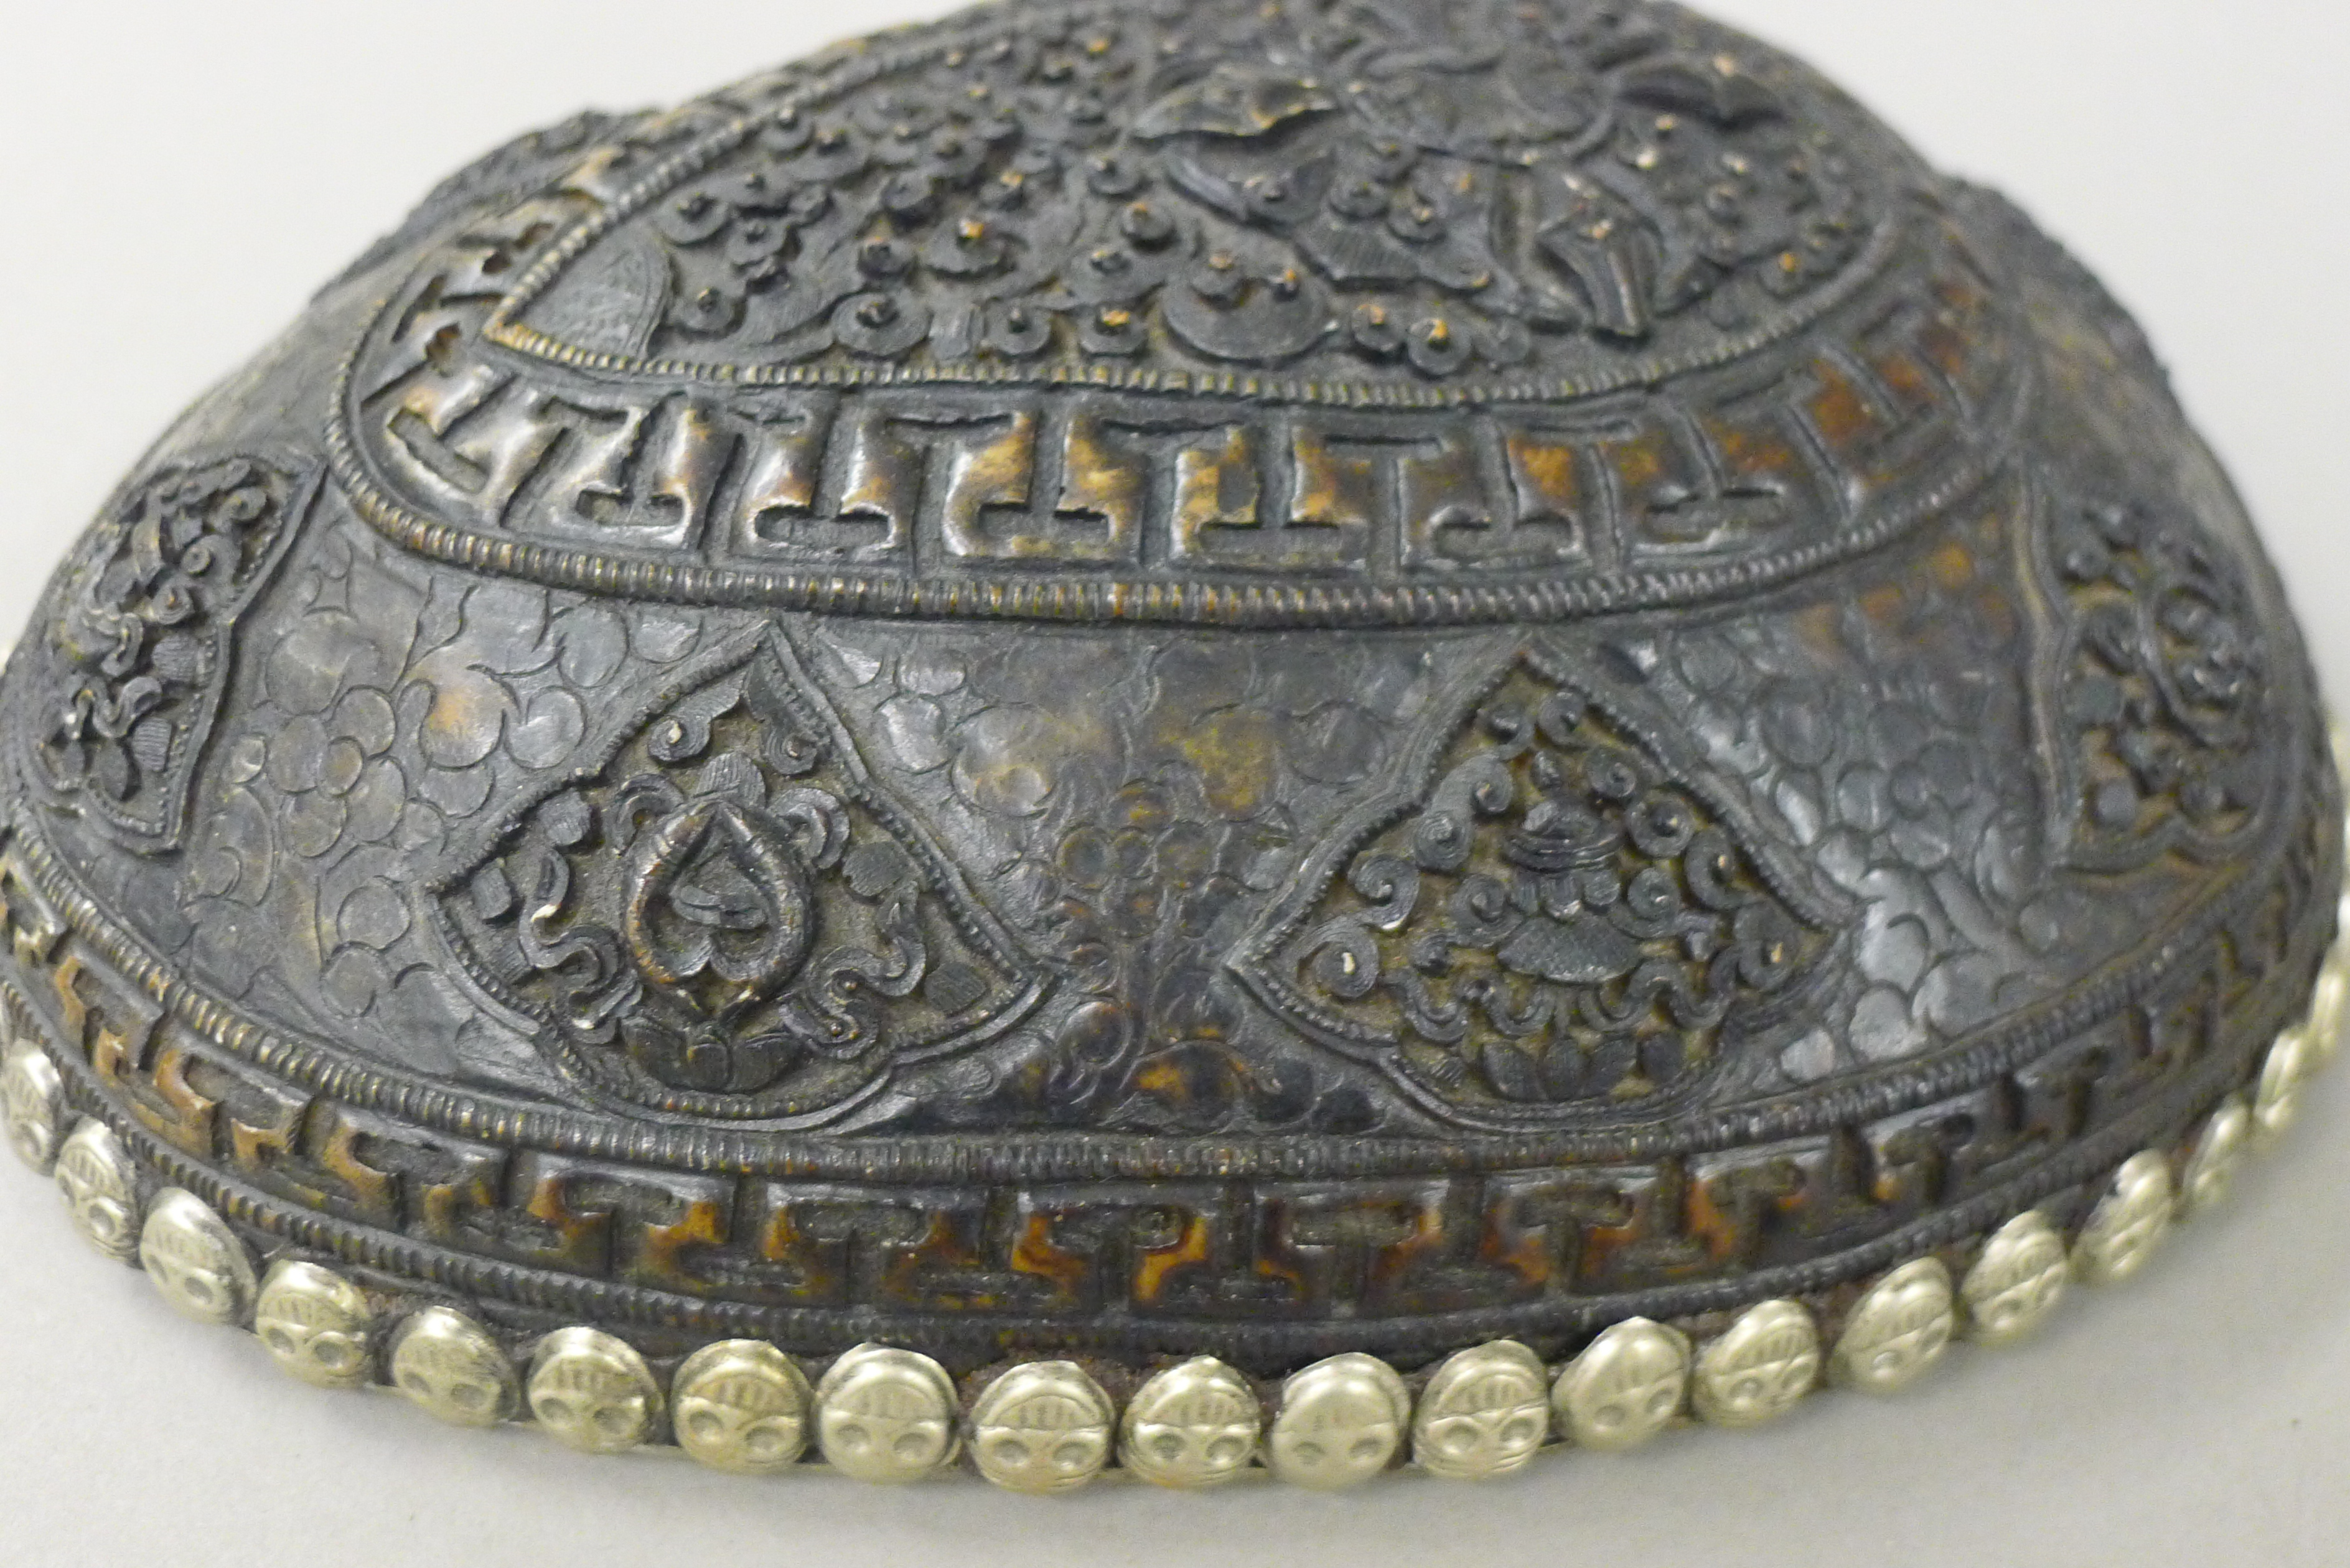 A decorative Tibetan type ornament. 13 cm wide. - Image 3 of 4